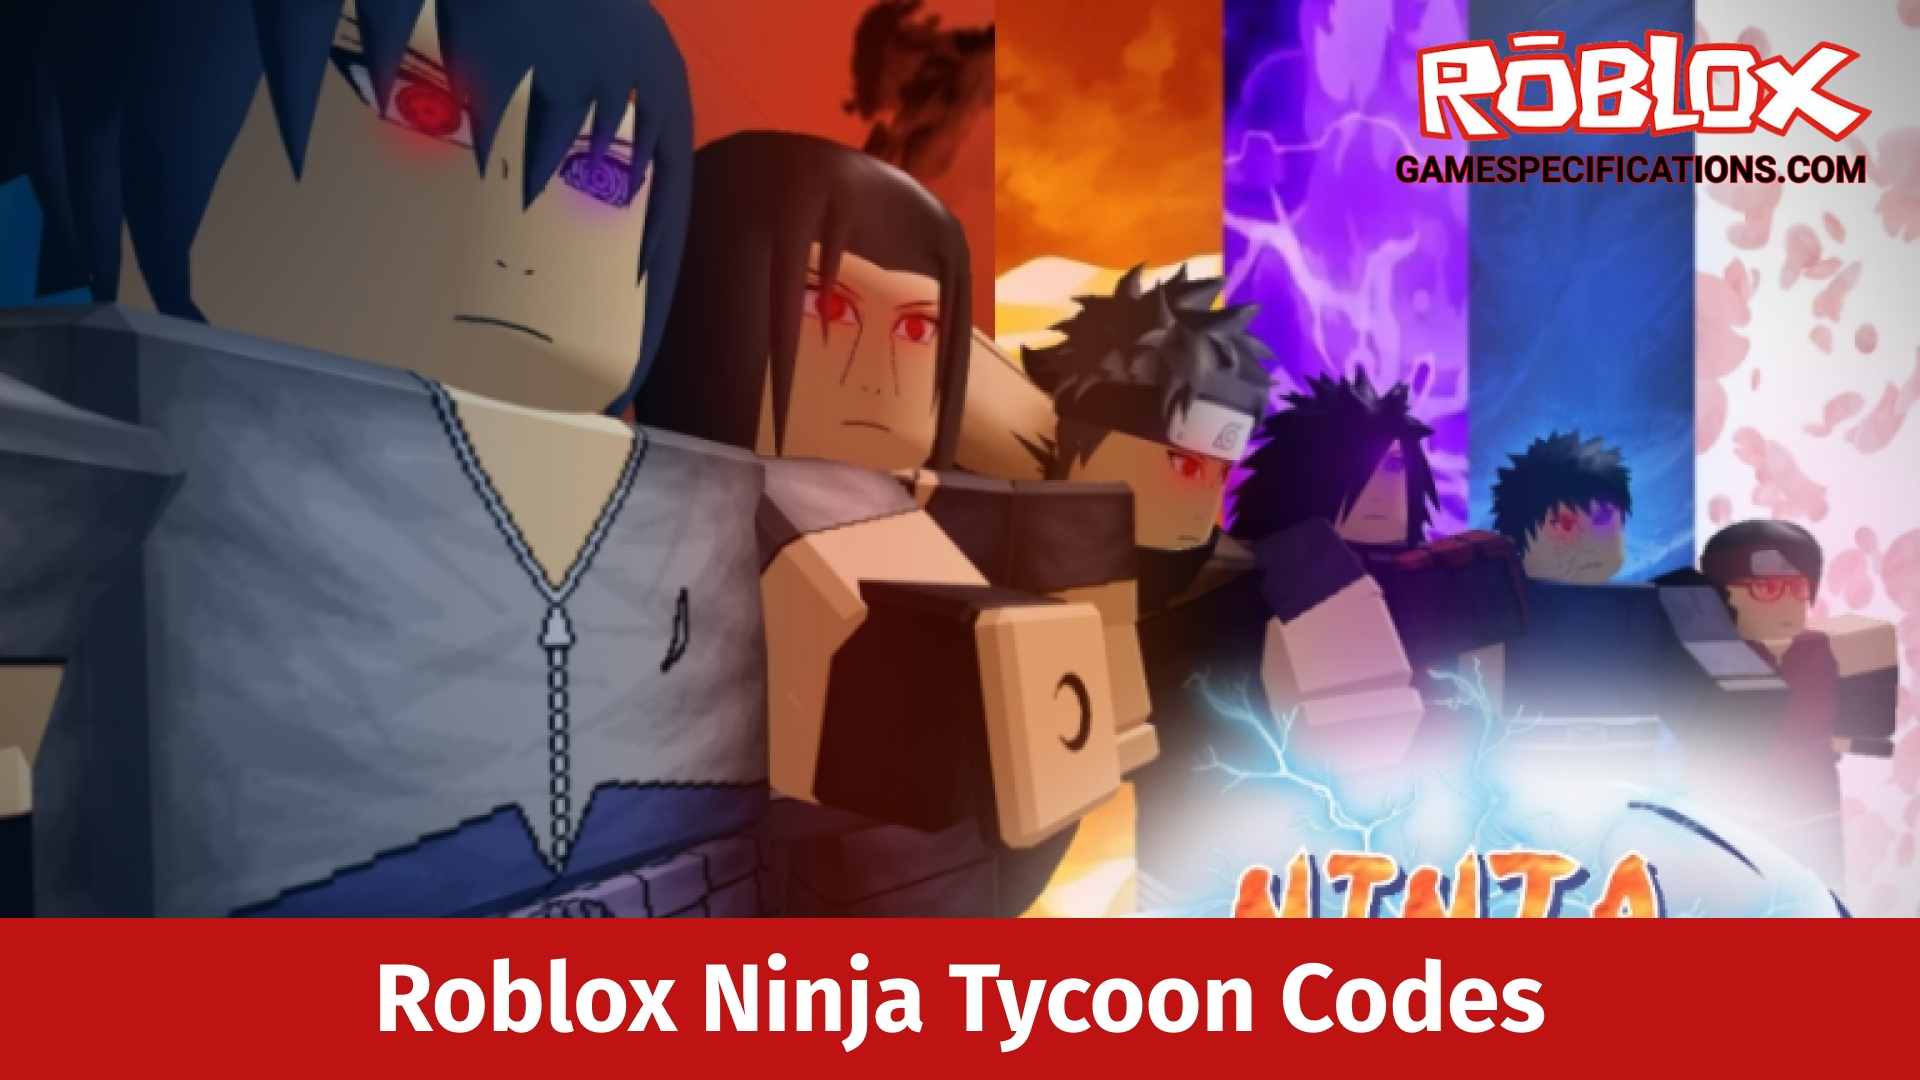 Roblox Ninja Tycoon Codes July 2021 Game Specifications - ninja codes roblox